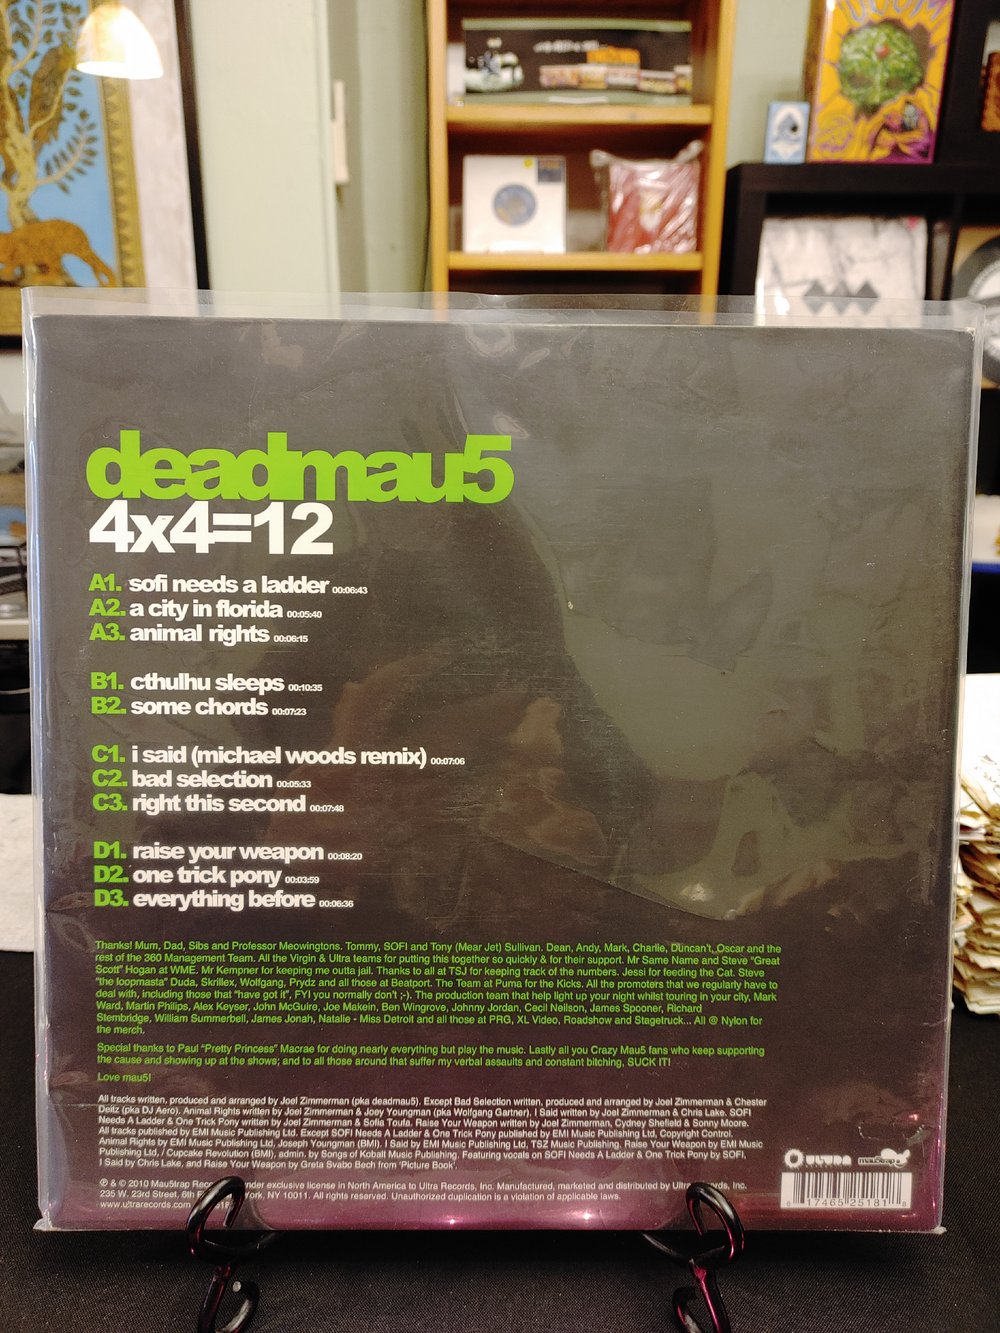 Dead mau5 - 4x4=12 vinyl